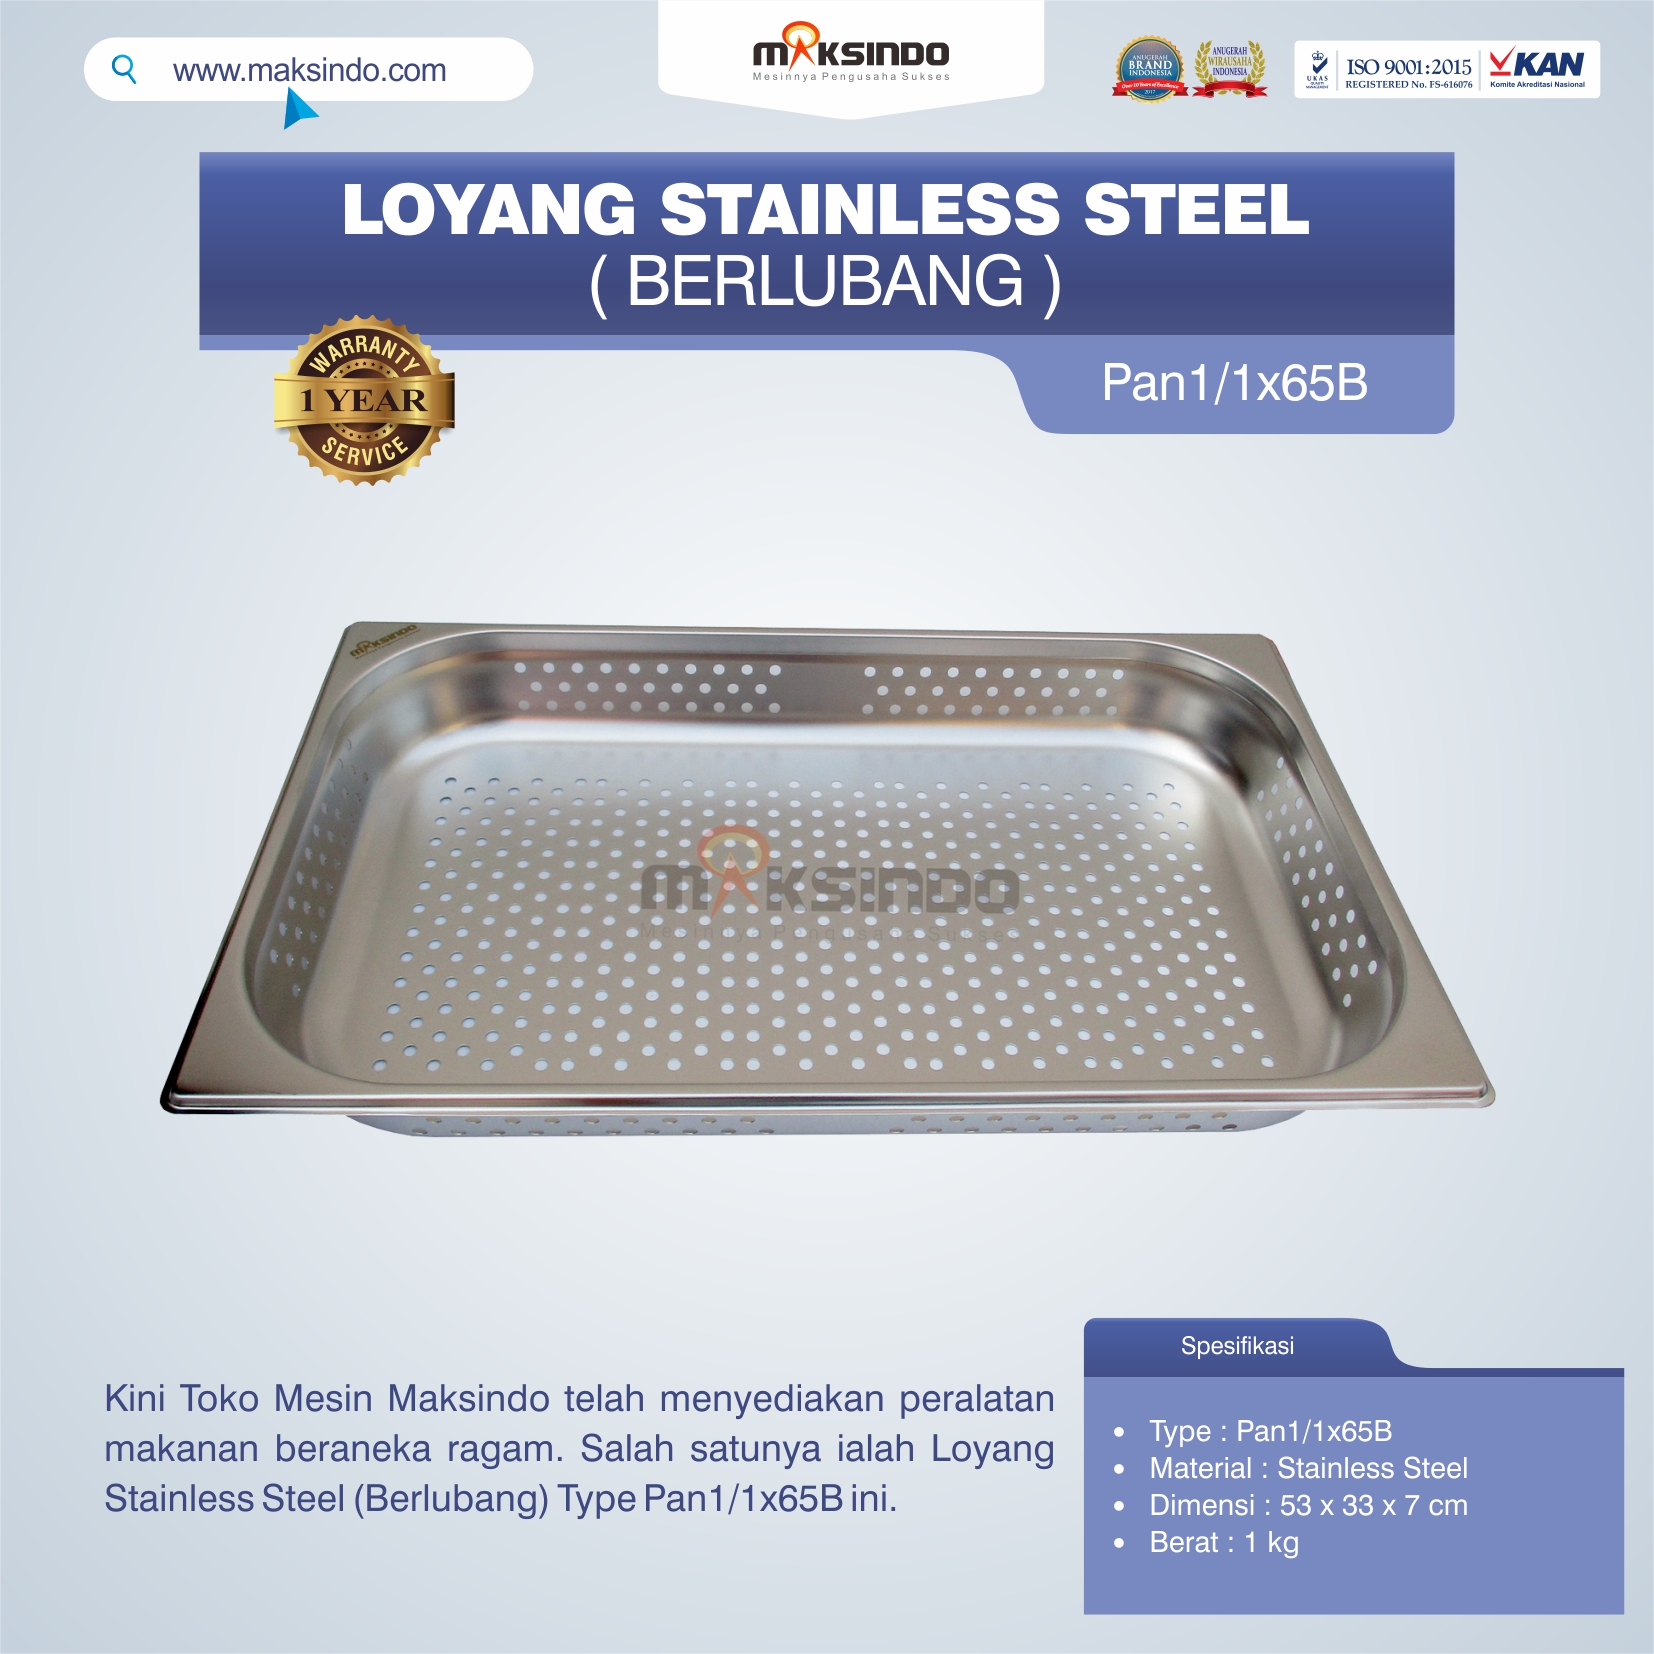 Jual Loyang Stainless Steel (Berlubang) Type Pan1/1x65B Di Bandung